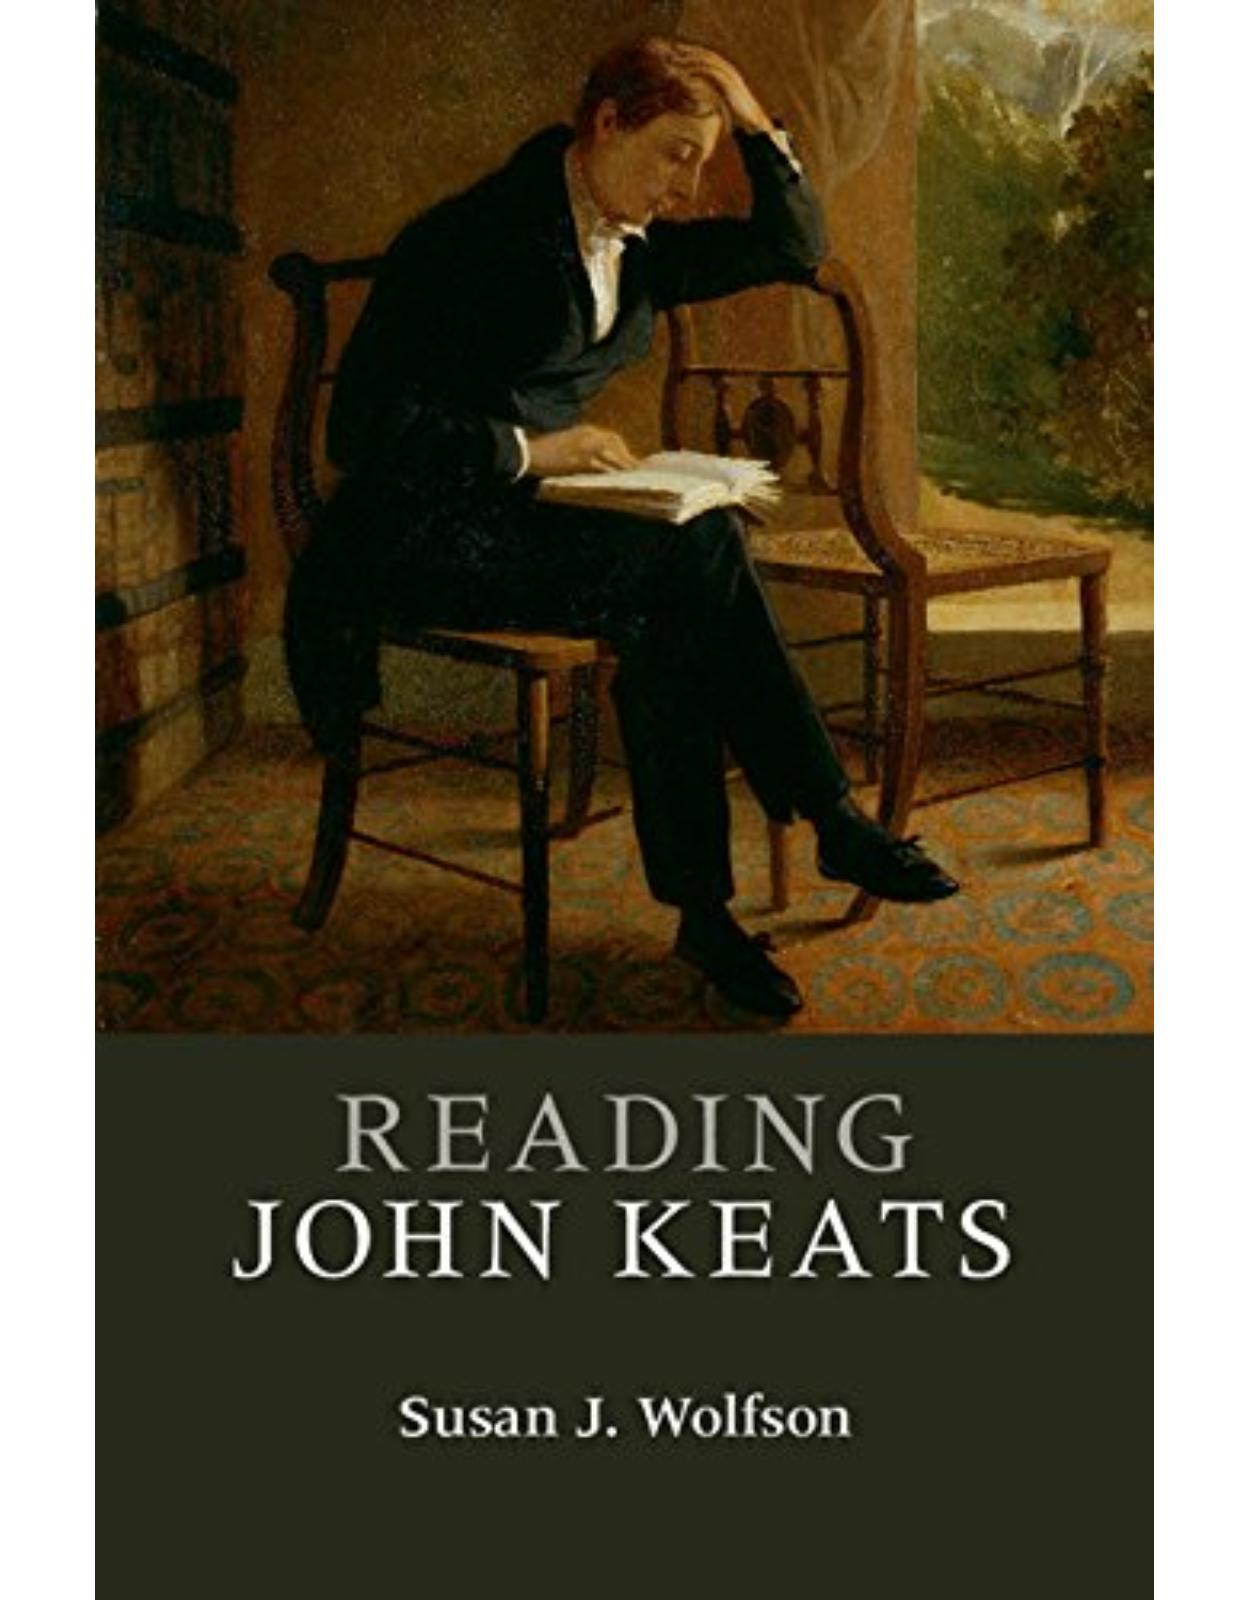 Reading John Keats (Cambridge Introductions to Literature)